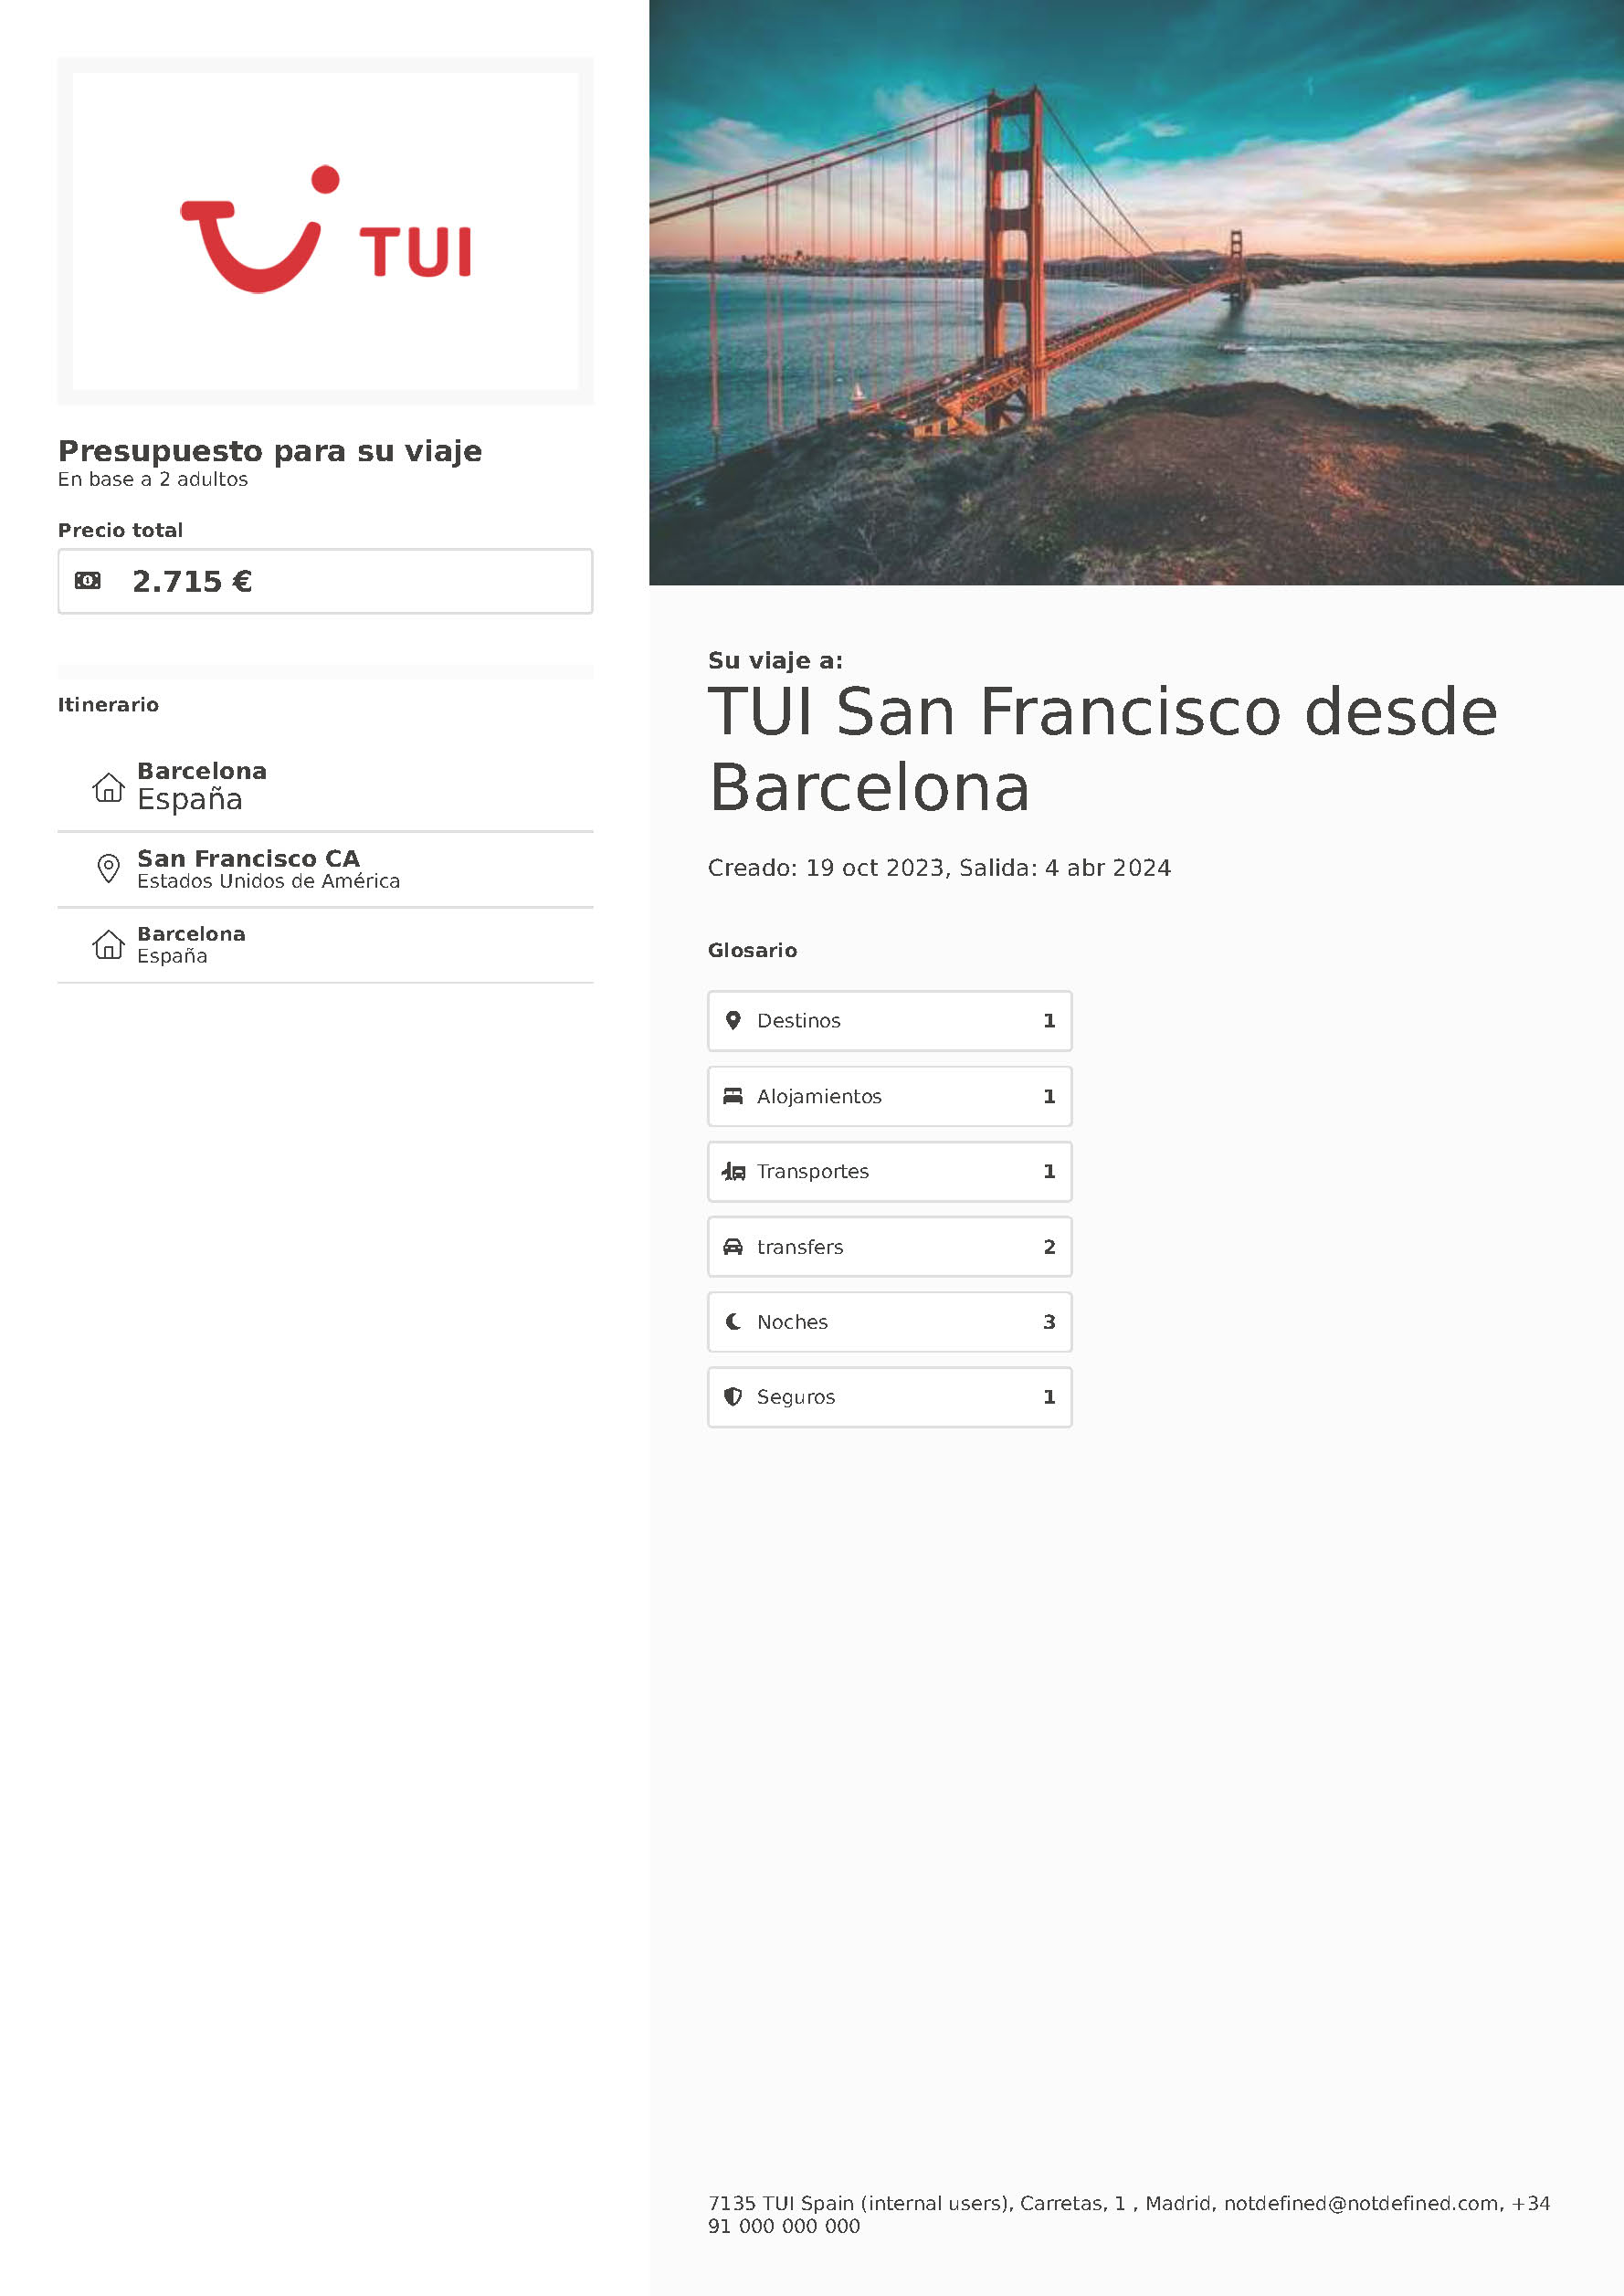 Oferta TUI Estados Unidos 2023-2024 Estancia en San Francisco 5 dias Hotel Riu salida en vuelo directo desde Barcelona